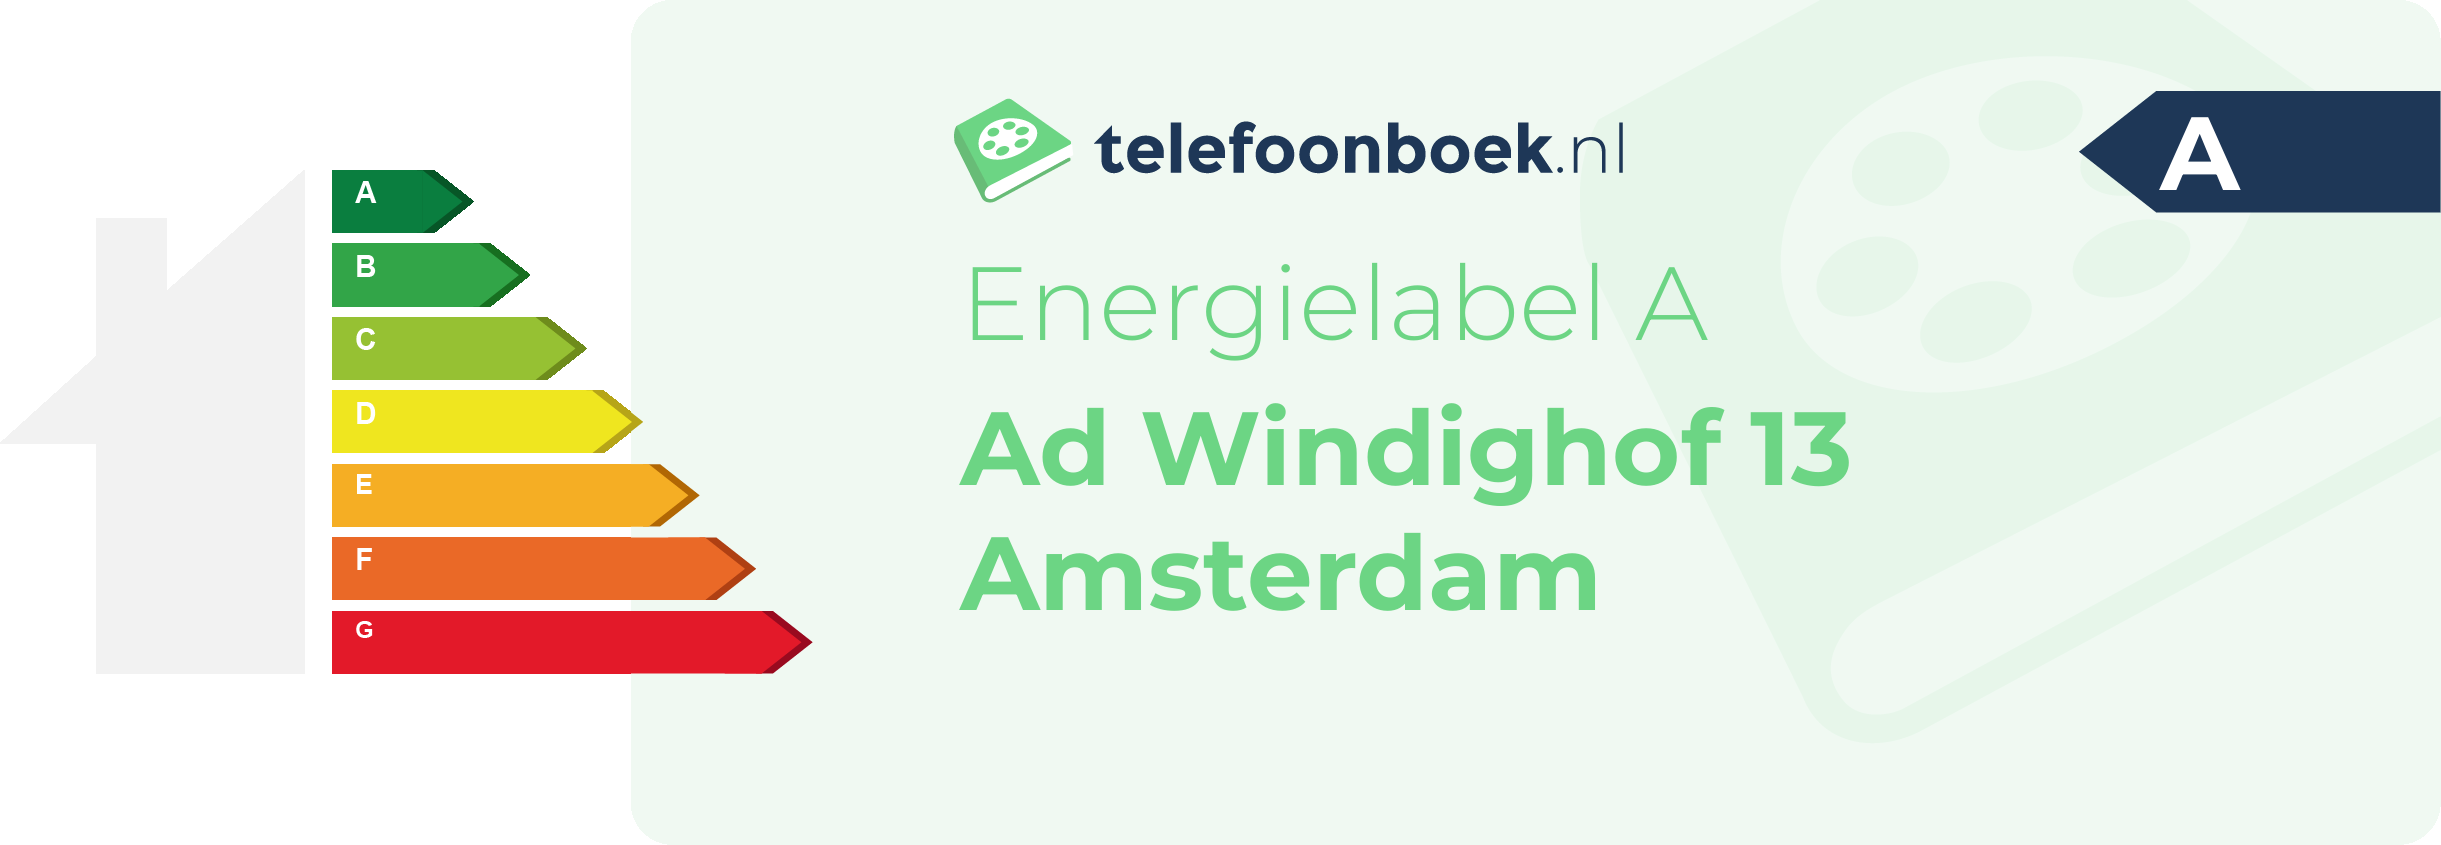 Energielabel Ad Windighof 13 Amsterdam